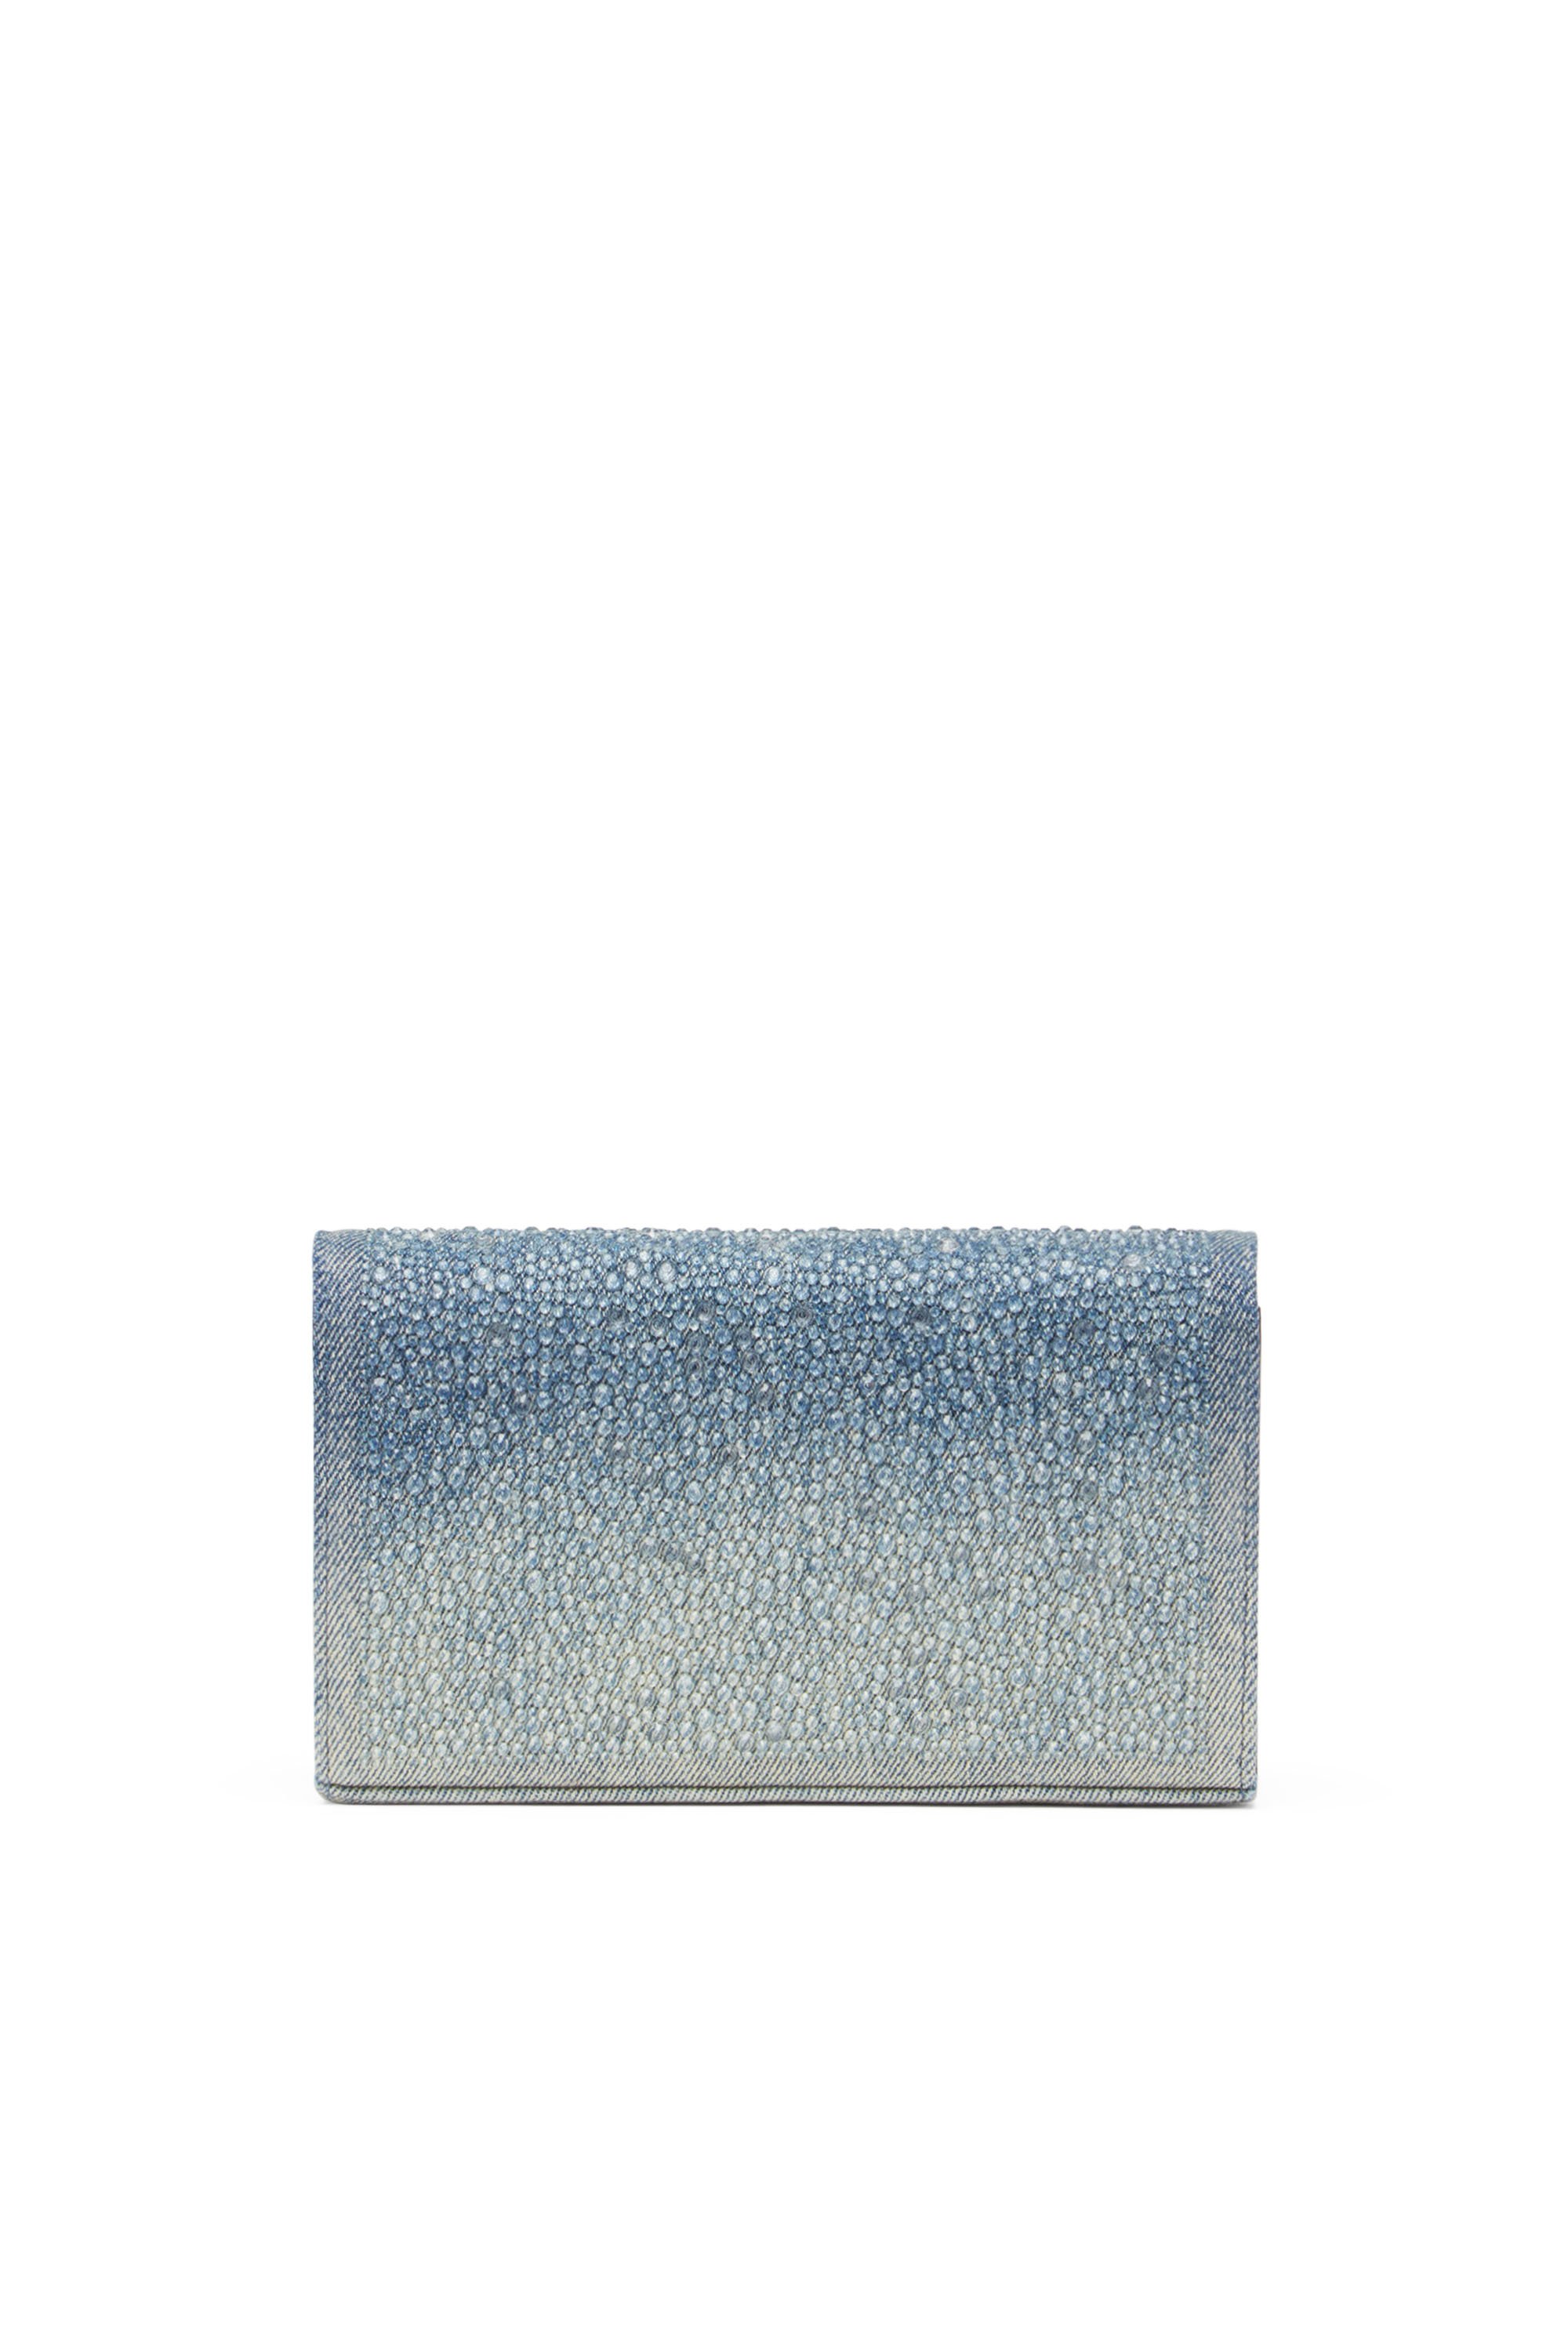 Diesel - 1DR WALLET STRAP, Female Wallet purse in crystal denim in Blue - Image 2